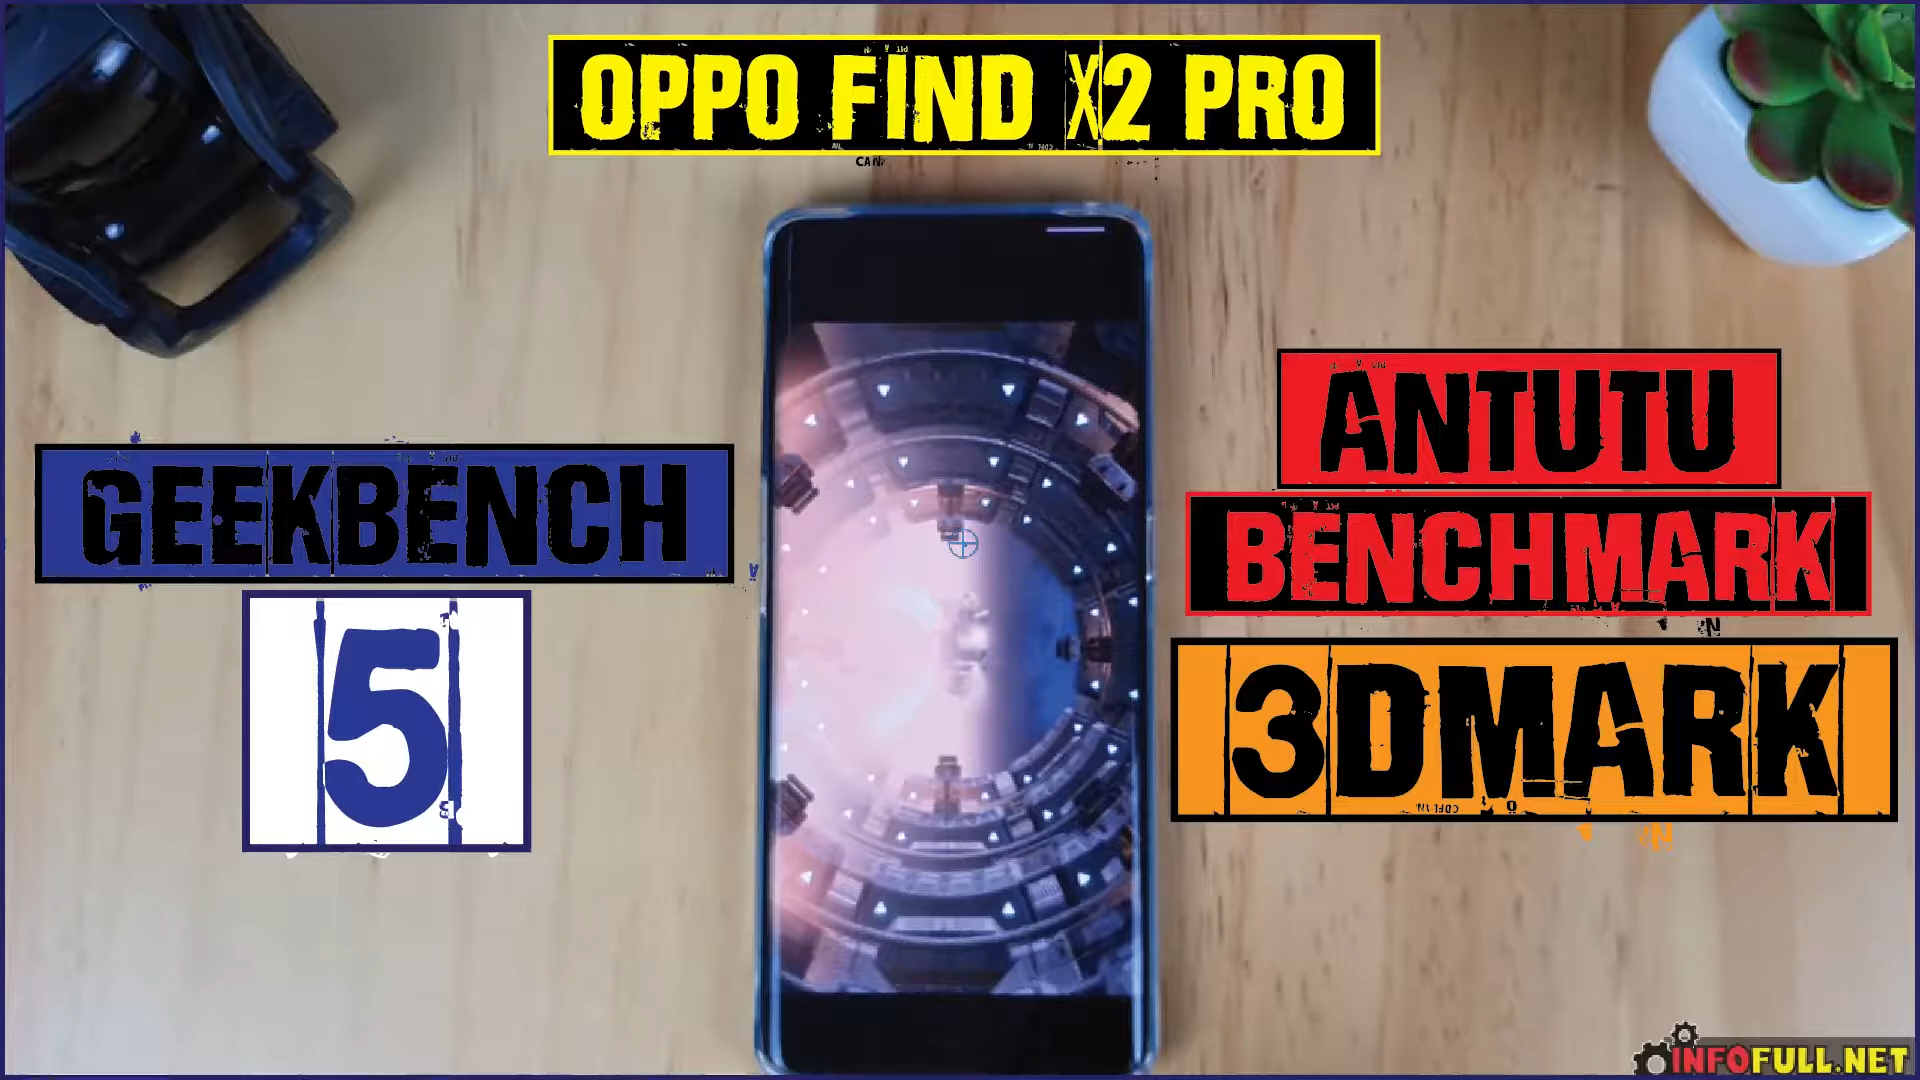 Oppo Find X2 Pro Antutu Benchmark & Geekbench 5, 3DMark - GSM FULL INFO